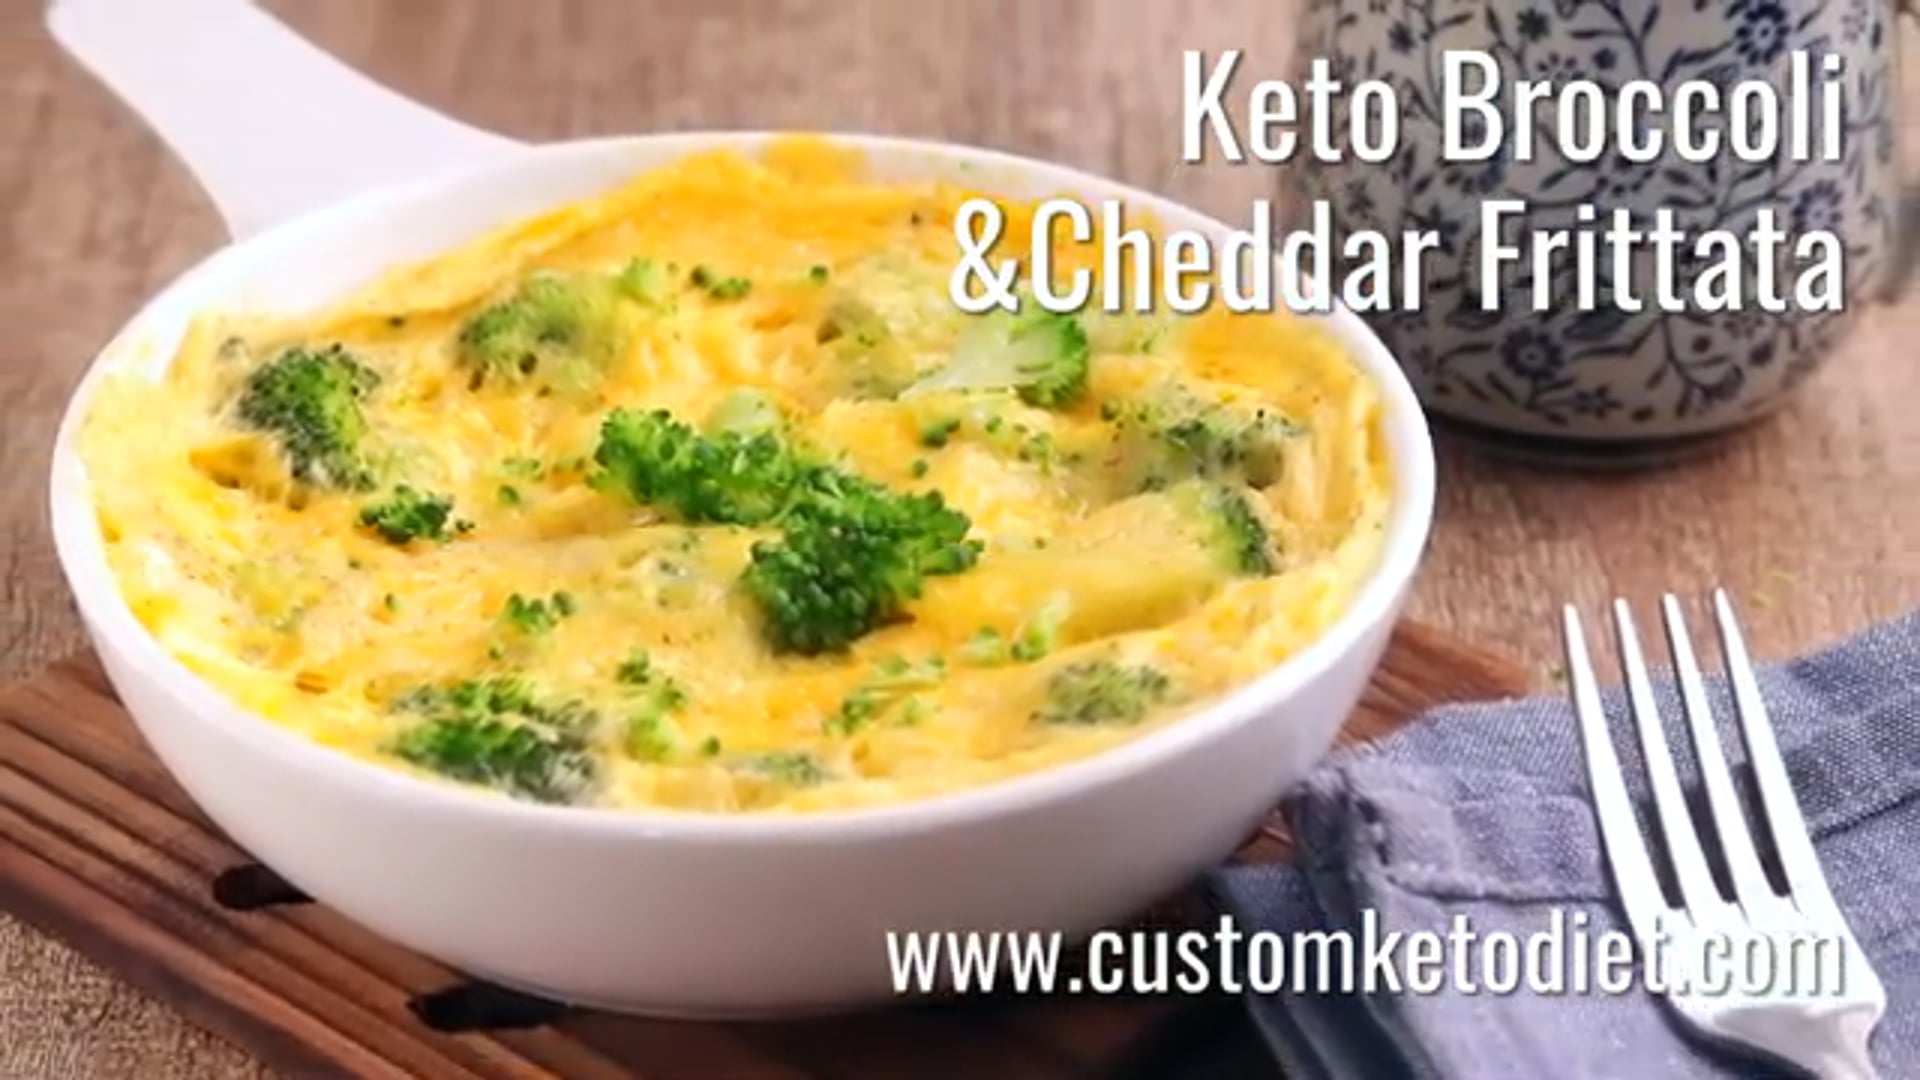 2 Keto Broccoli and Cheddar Frittata.mp4